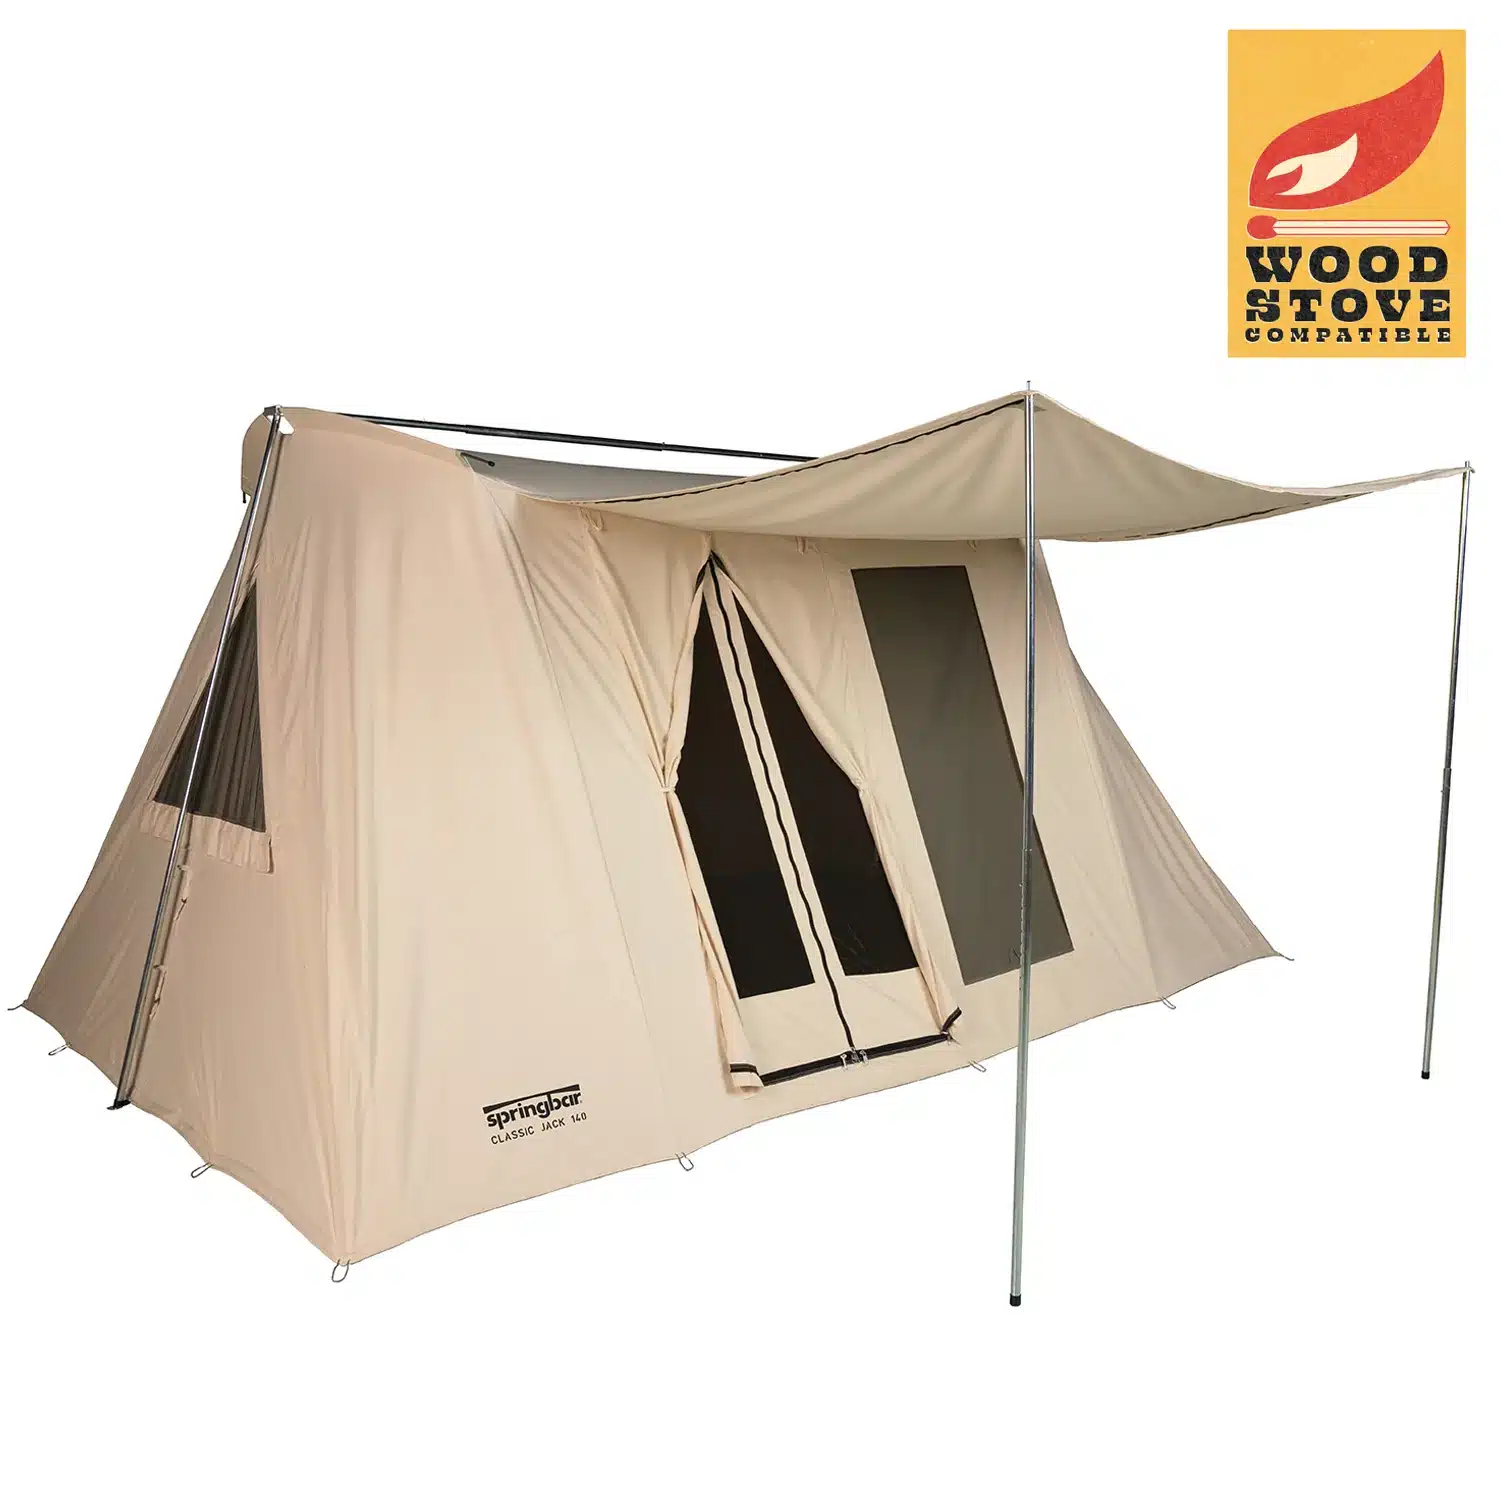 Springbar Classic Jack 140 Tent